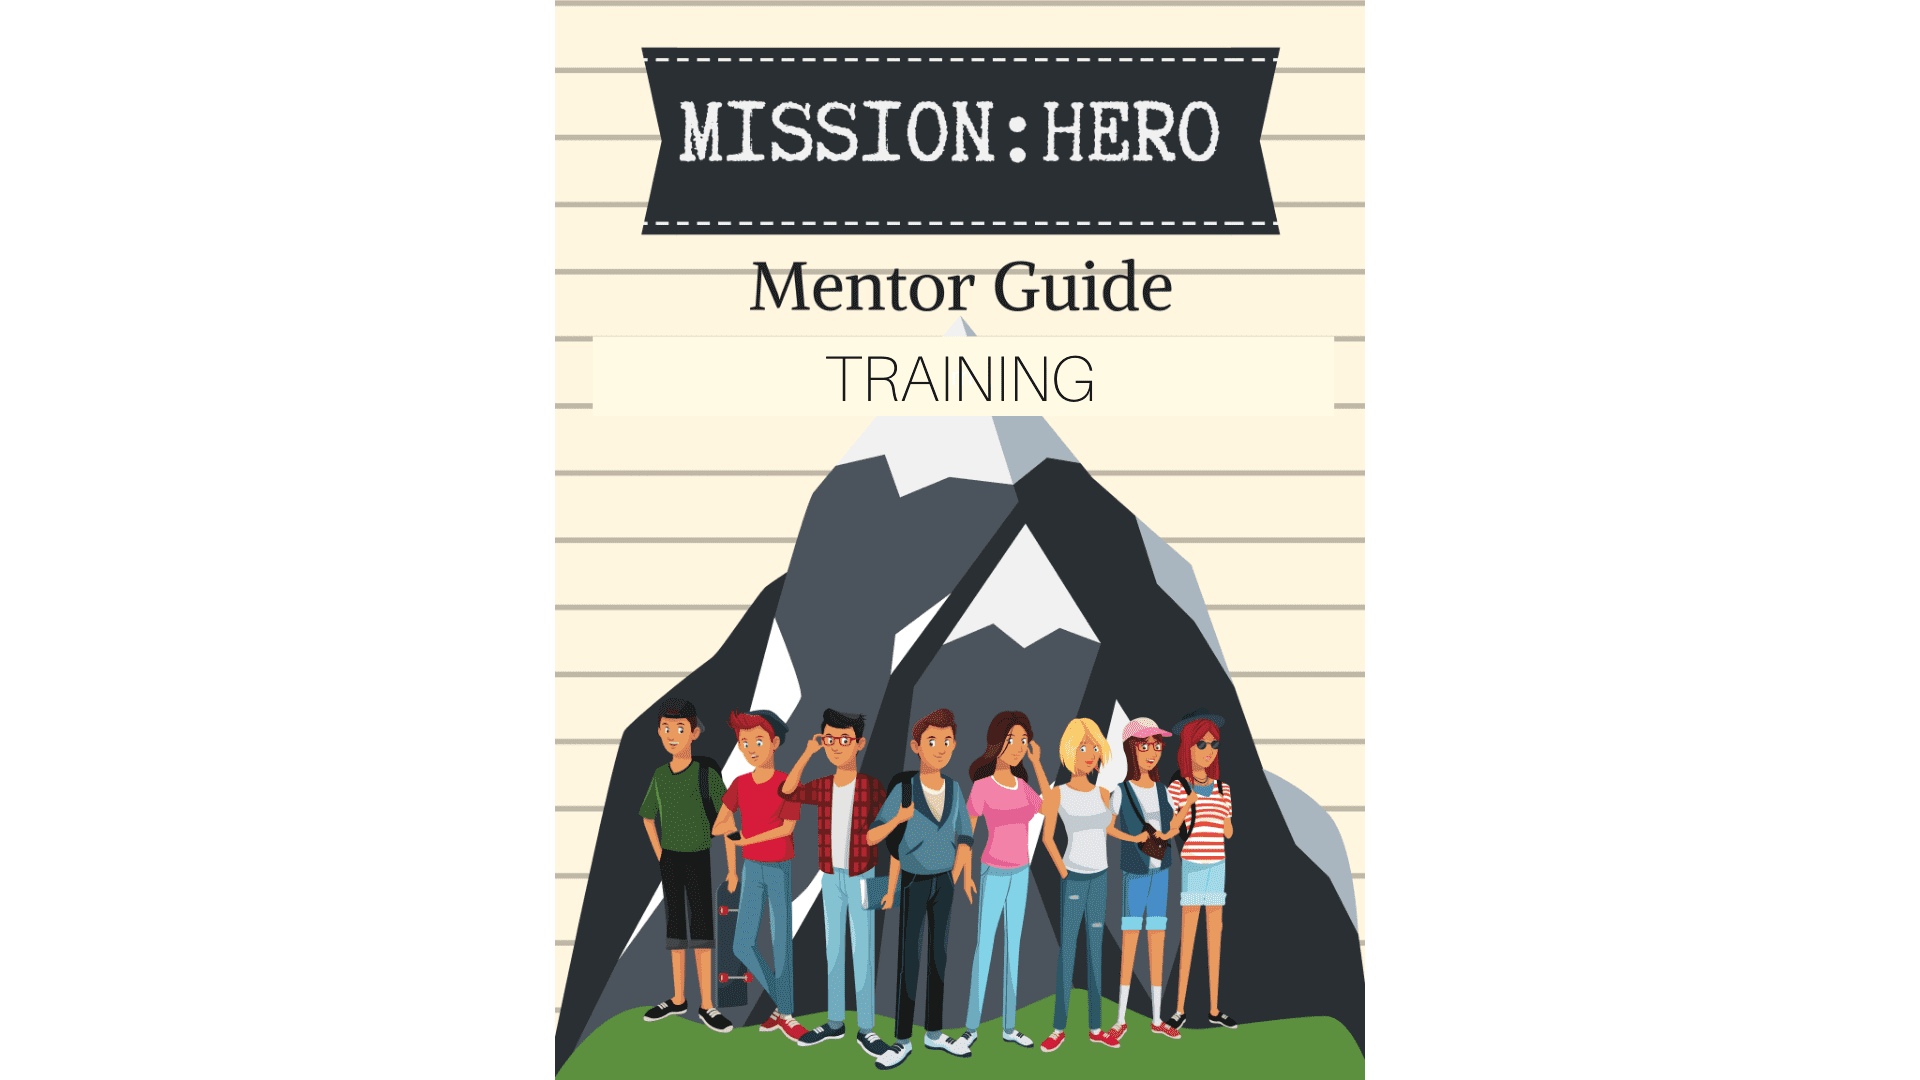 Mentor Training Mission: Hero